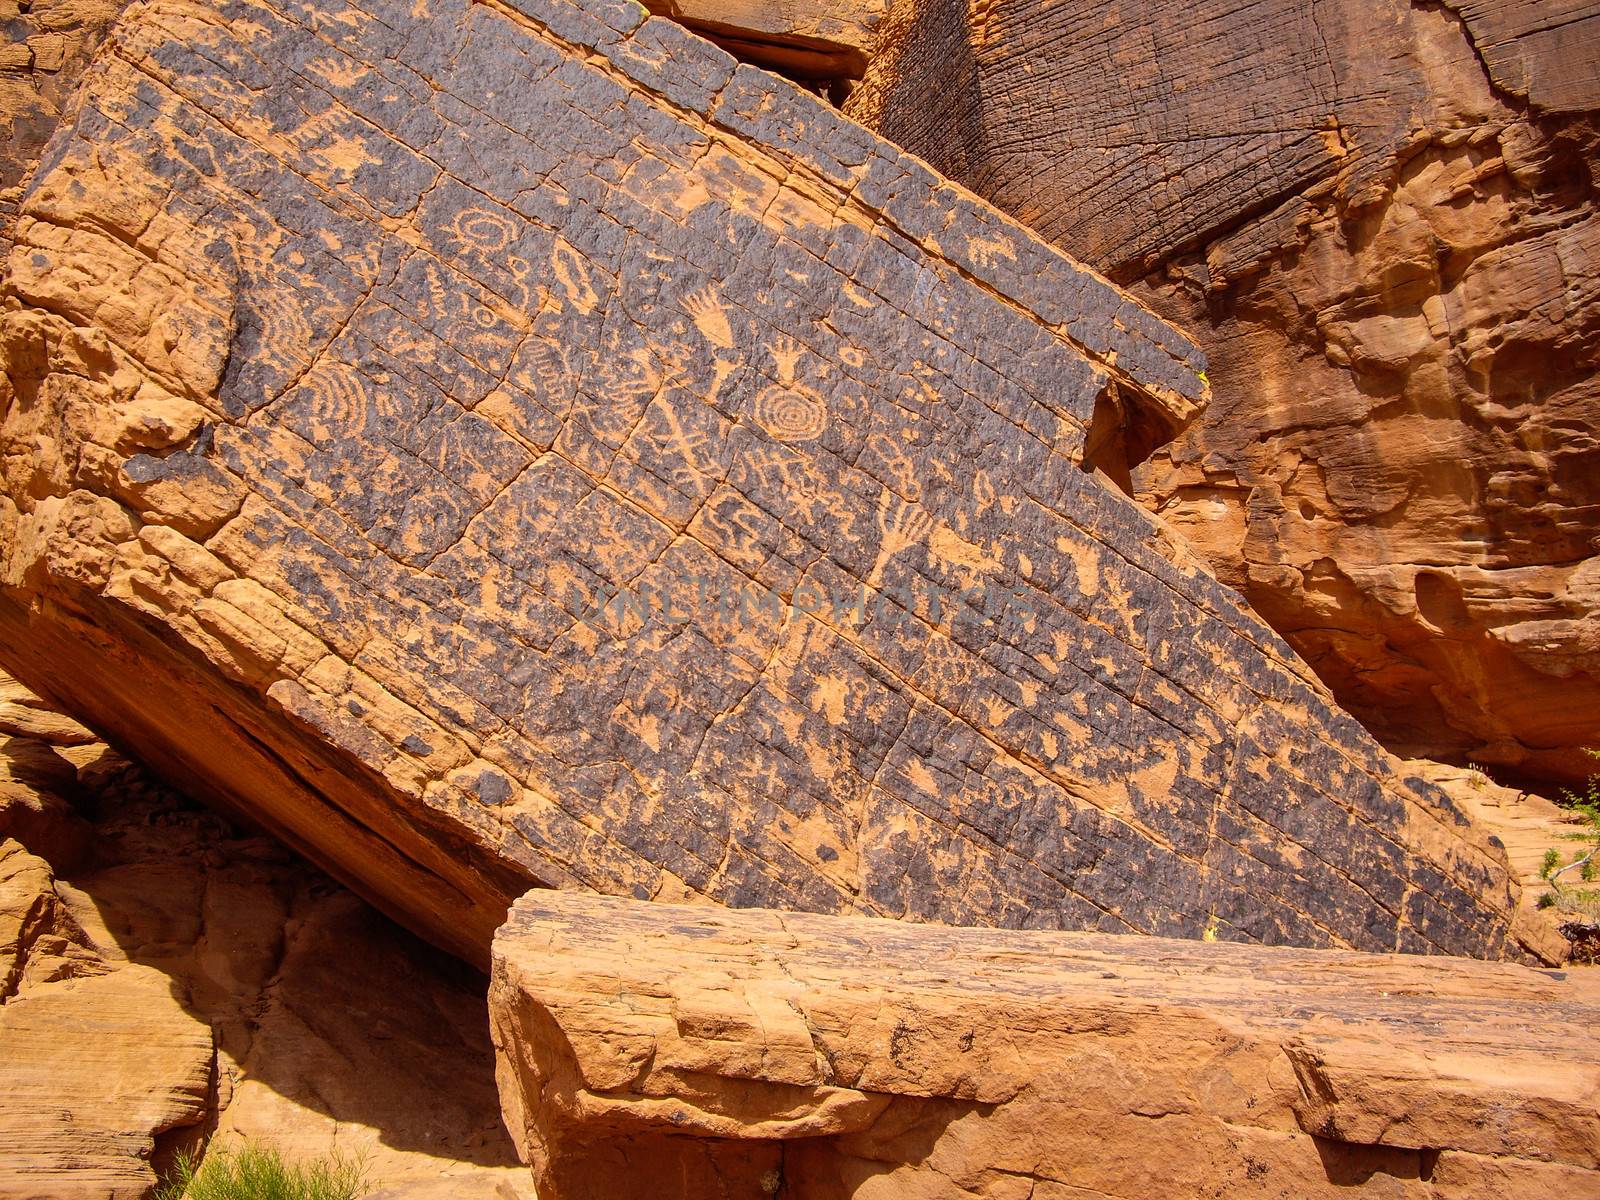 Native American Petroglyphs by emattil